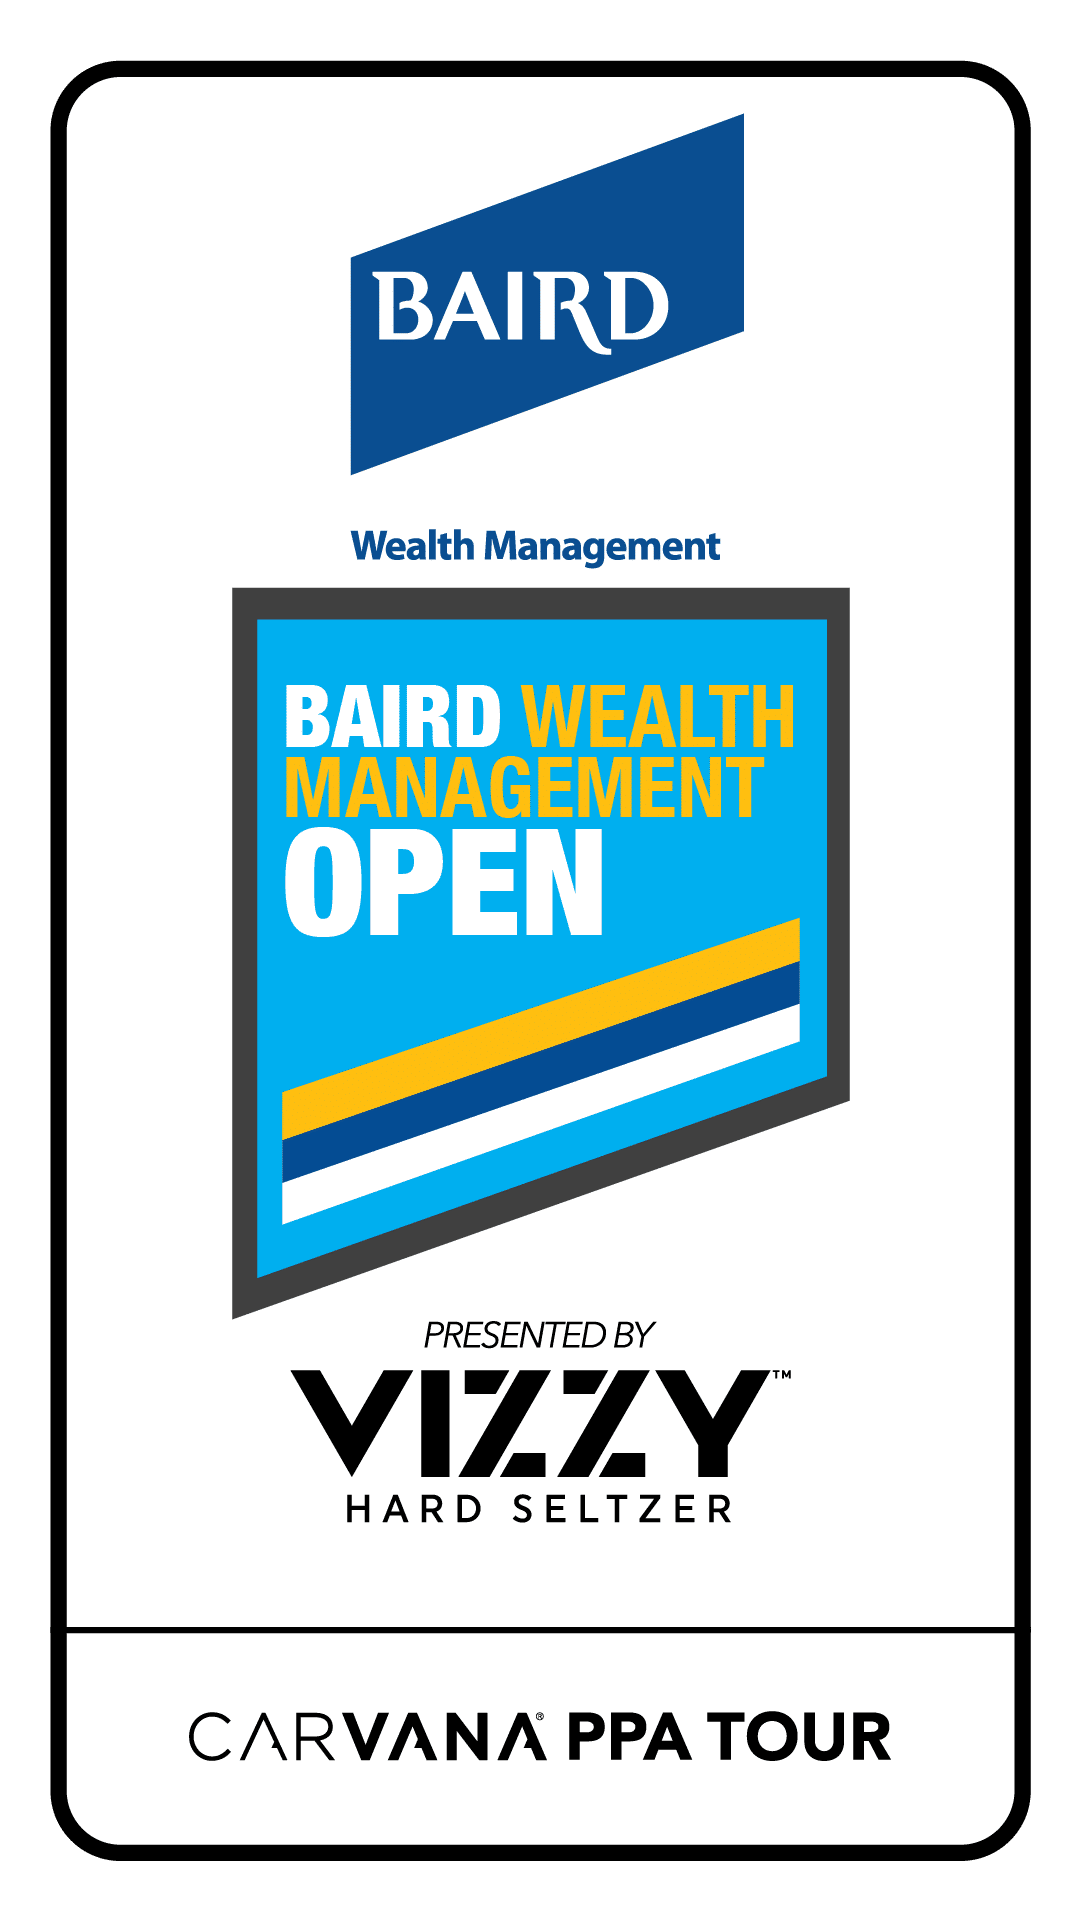 Carvana PPA Tour Baird Wealth Management Cincinnati Open Presented by Vizzy Tournament Logo PNG